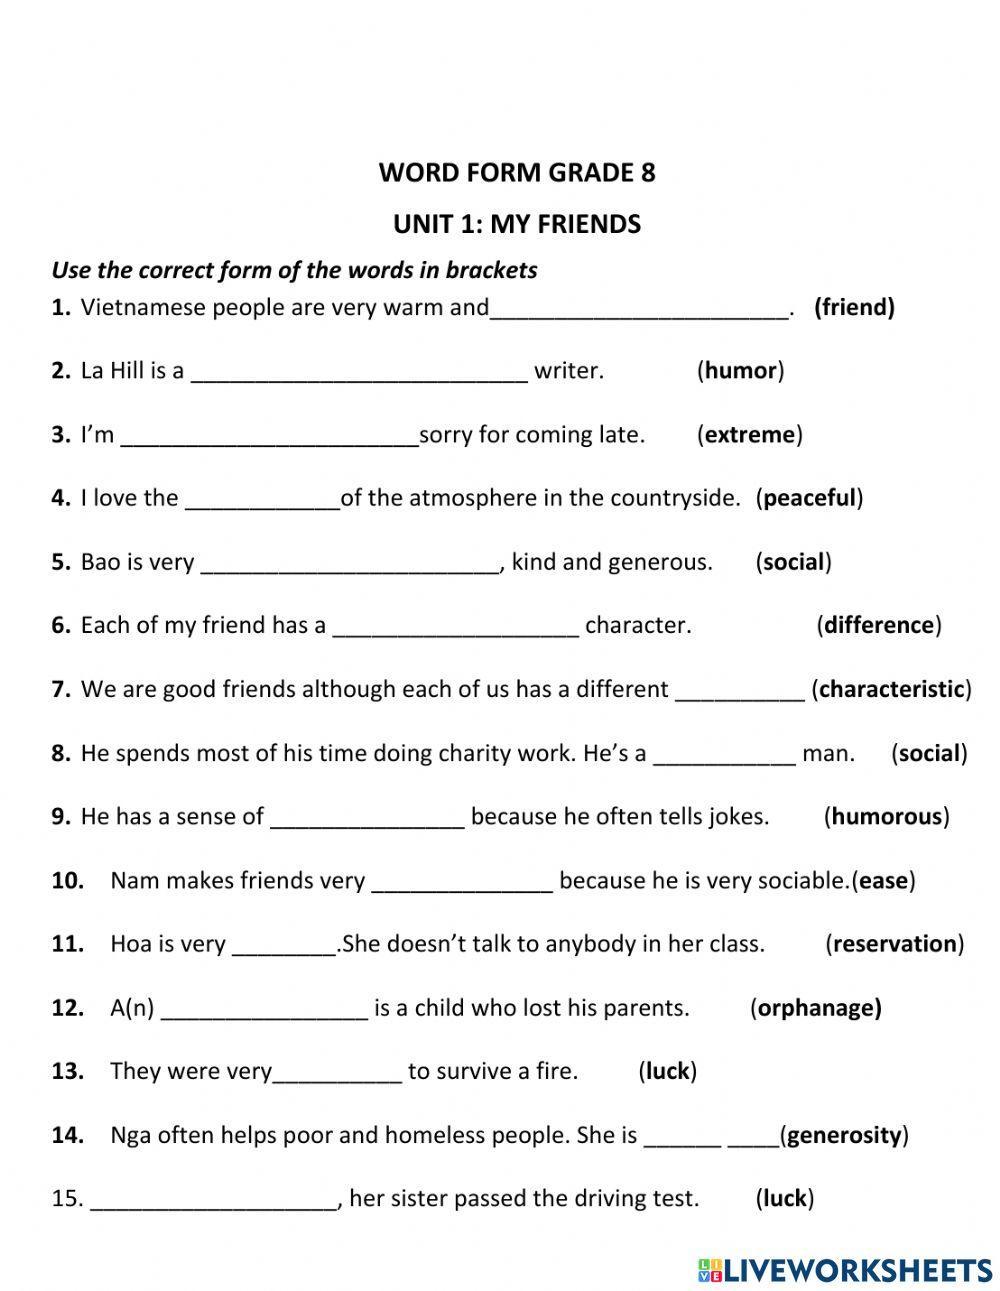 Word form unit 1 grade 8